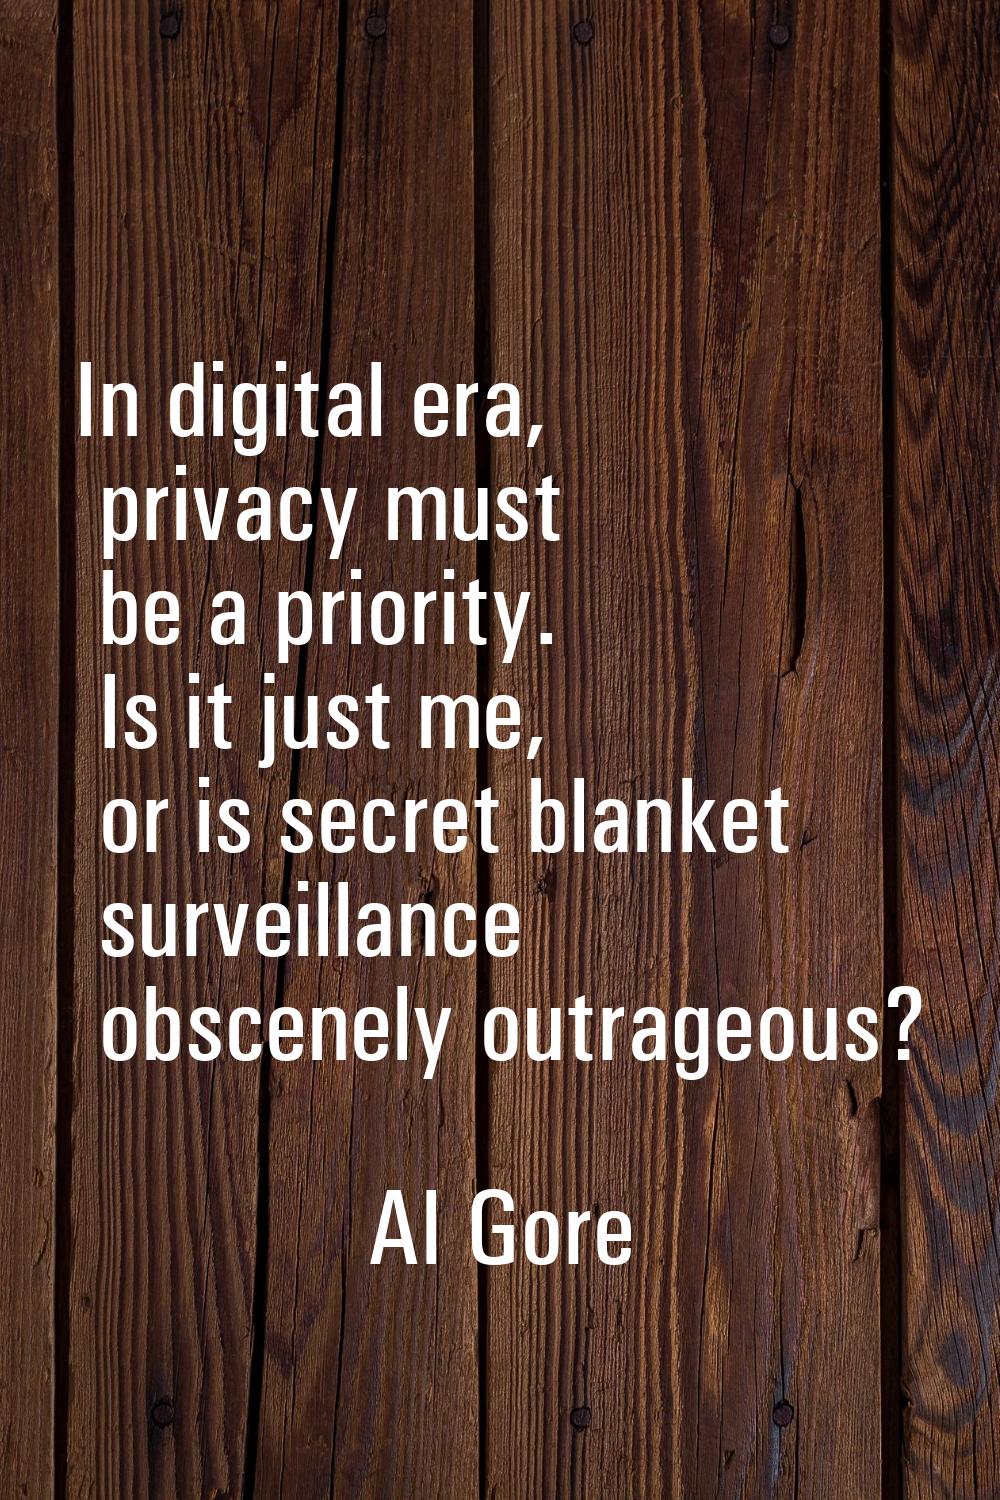 In digital era, privacy must be a priority. Is it just me, or is secret blanket surveillance obscen